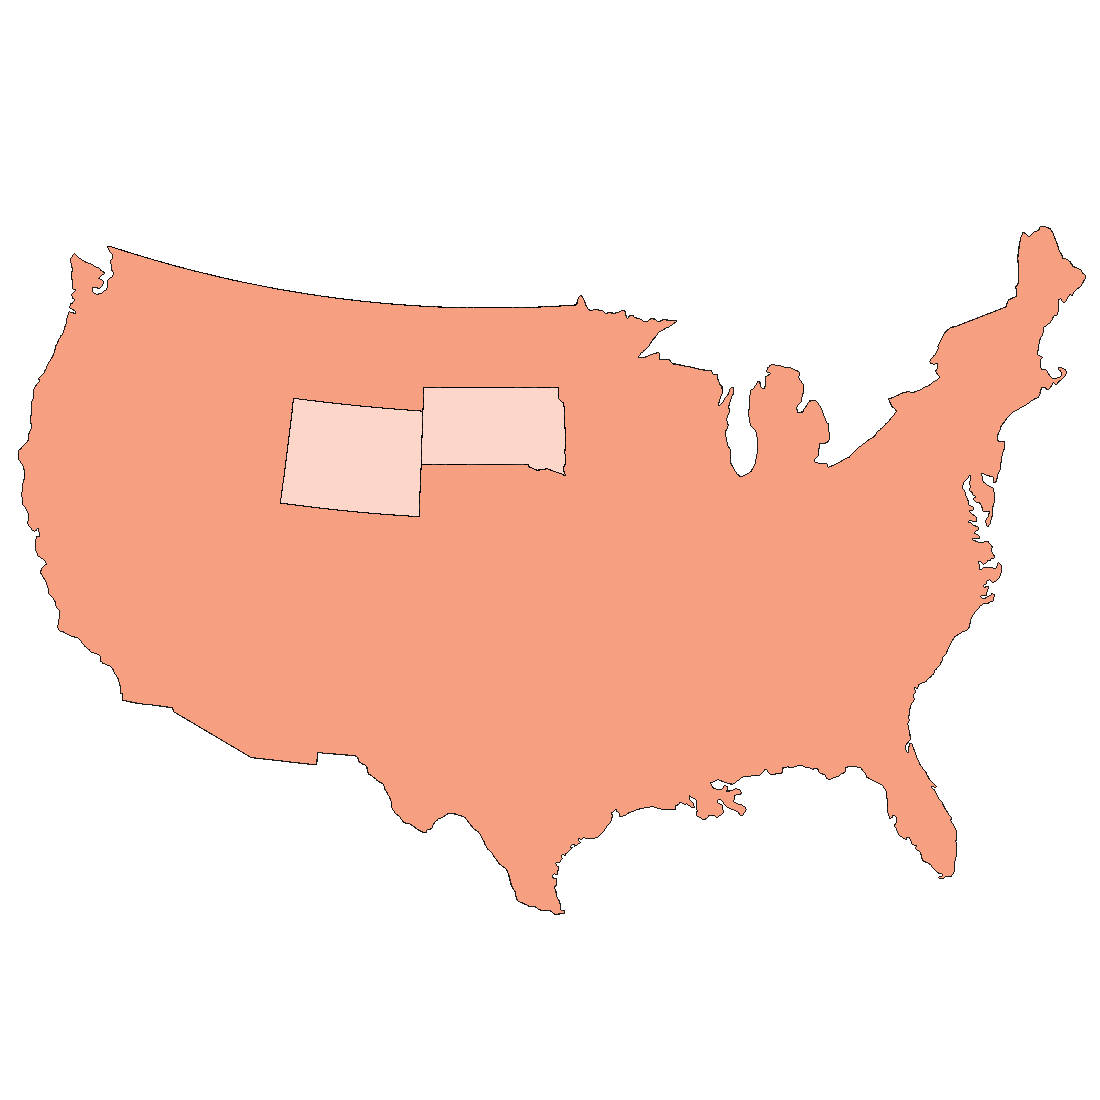 USA - Wyoming / South Dakota 